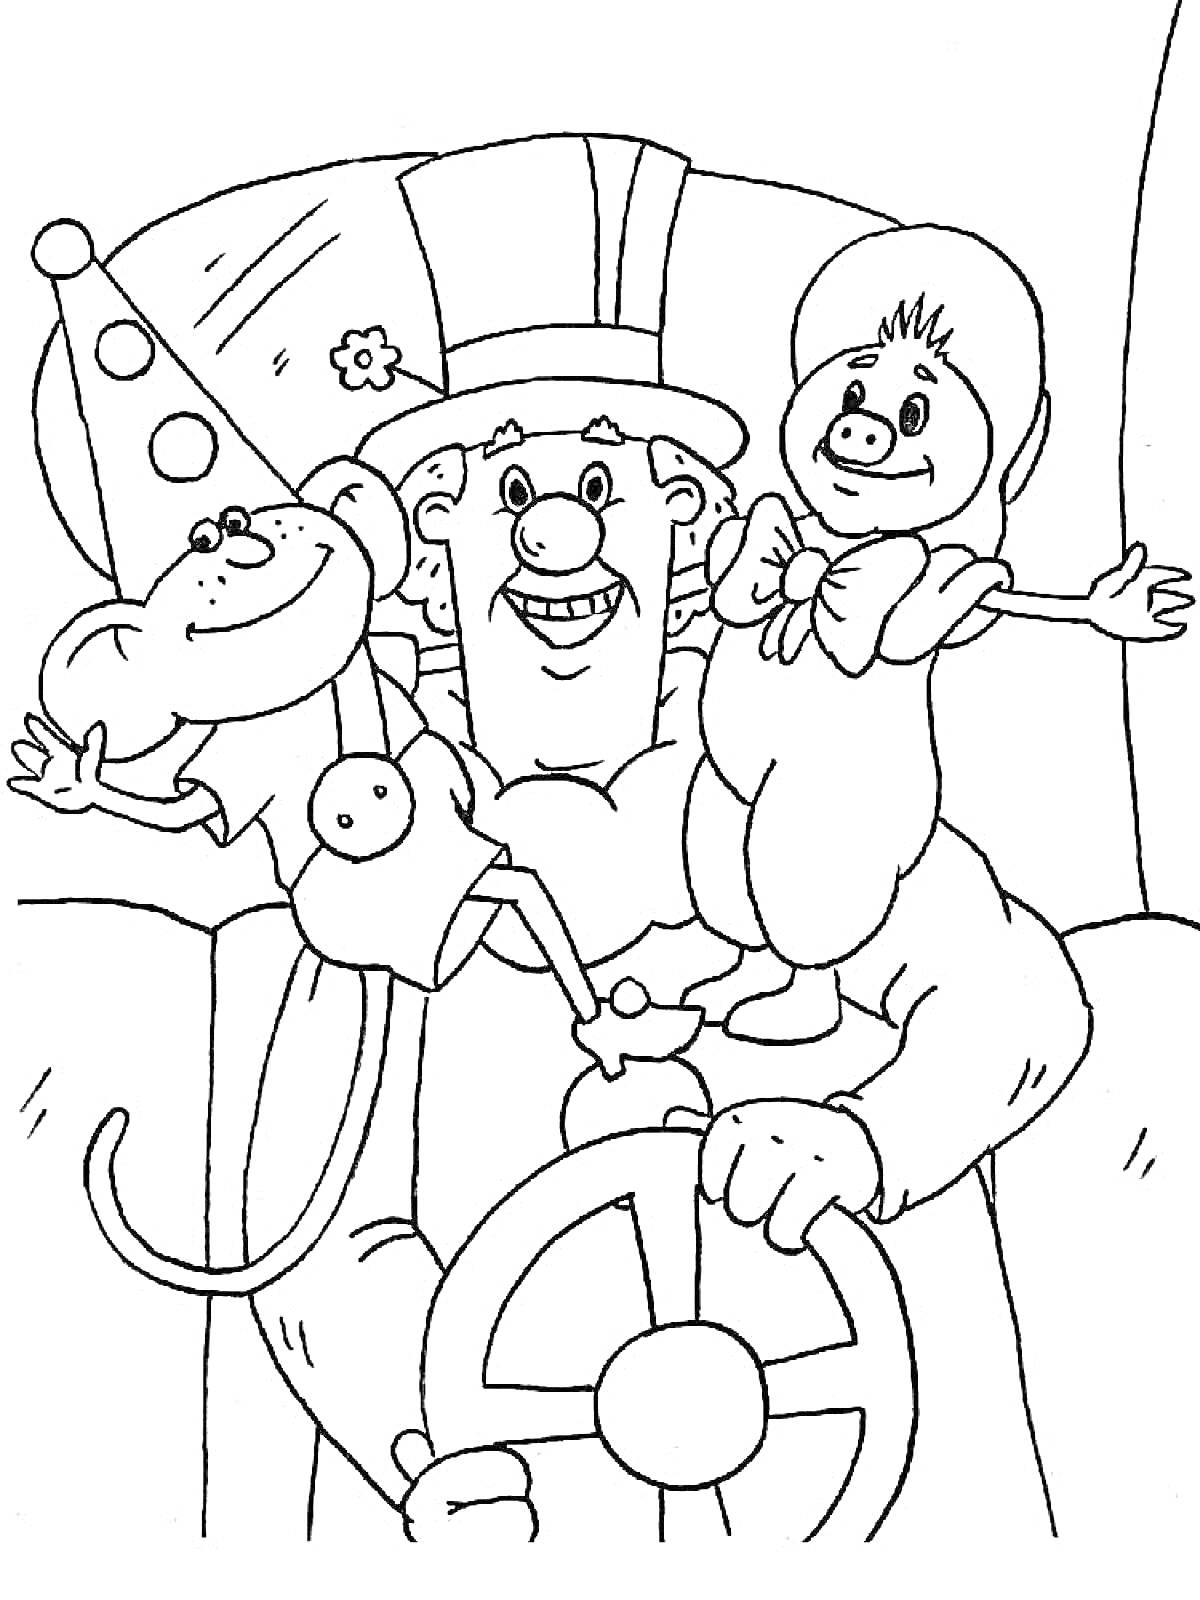 Раскраска Фунтик за рулем с клоуном и обезьянкой